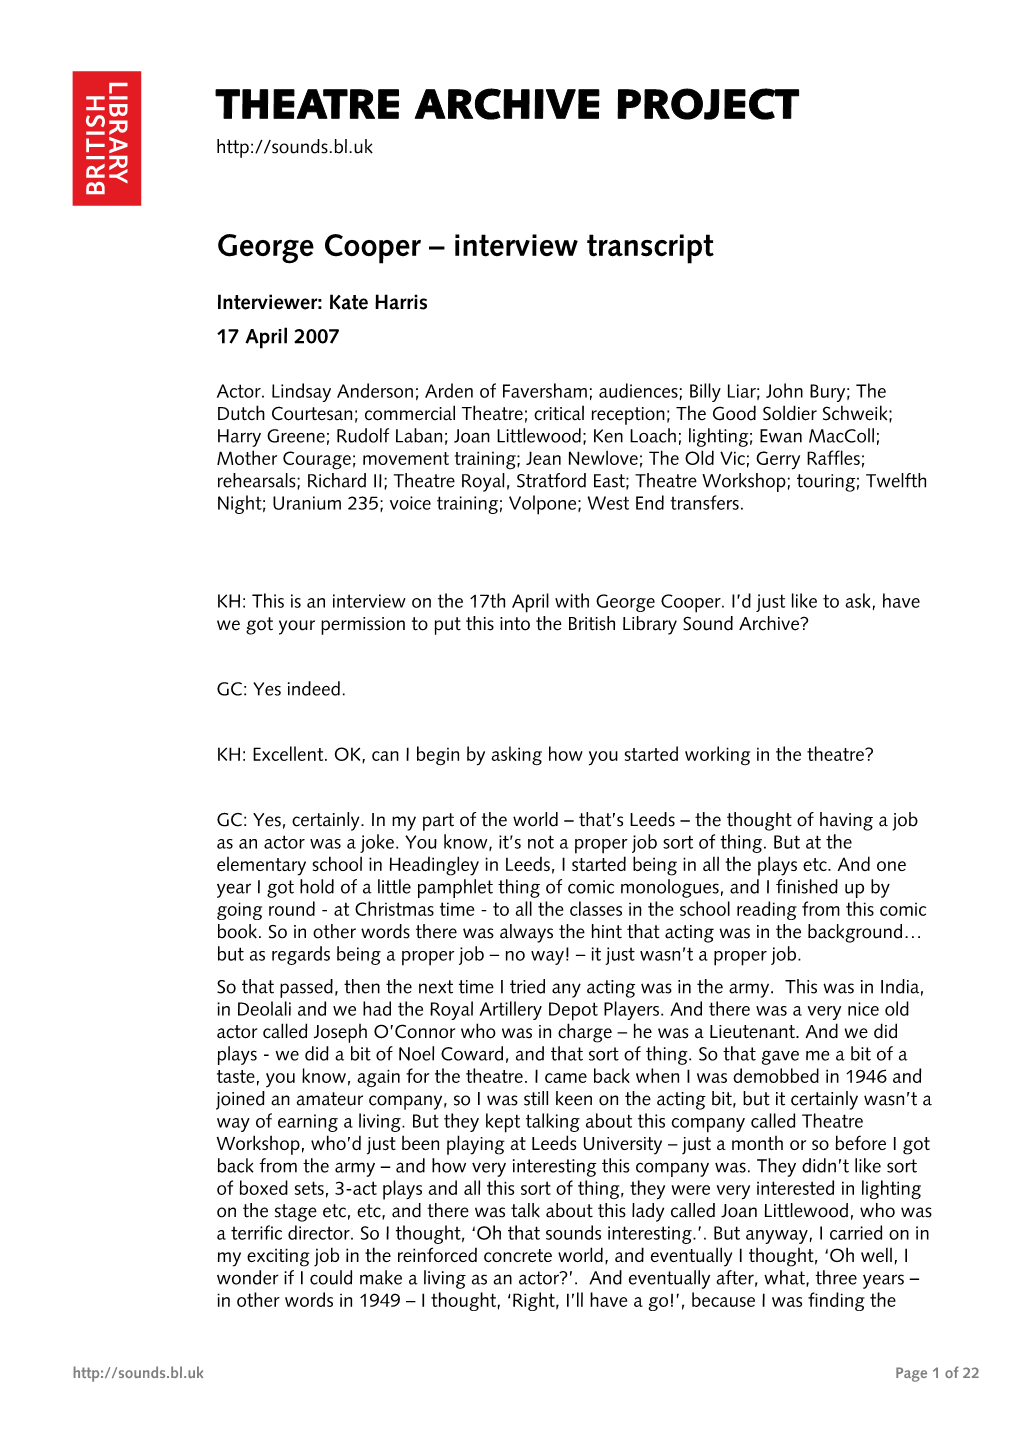 George Cooper – Interview Transcript